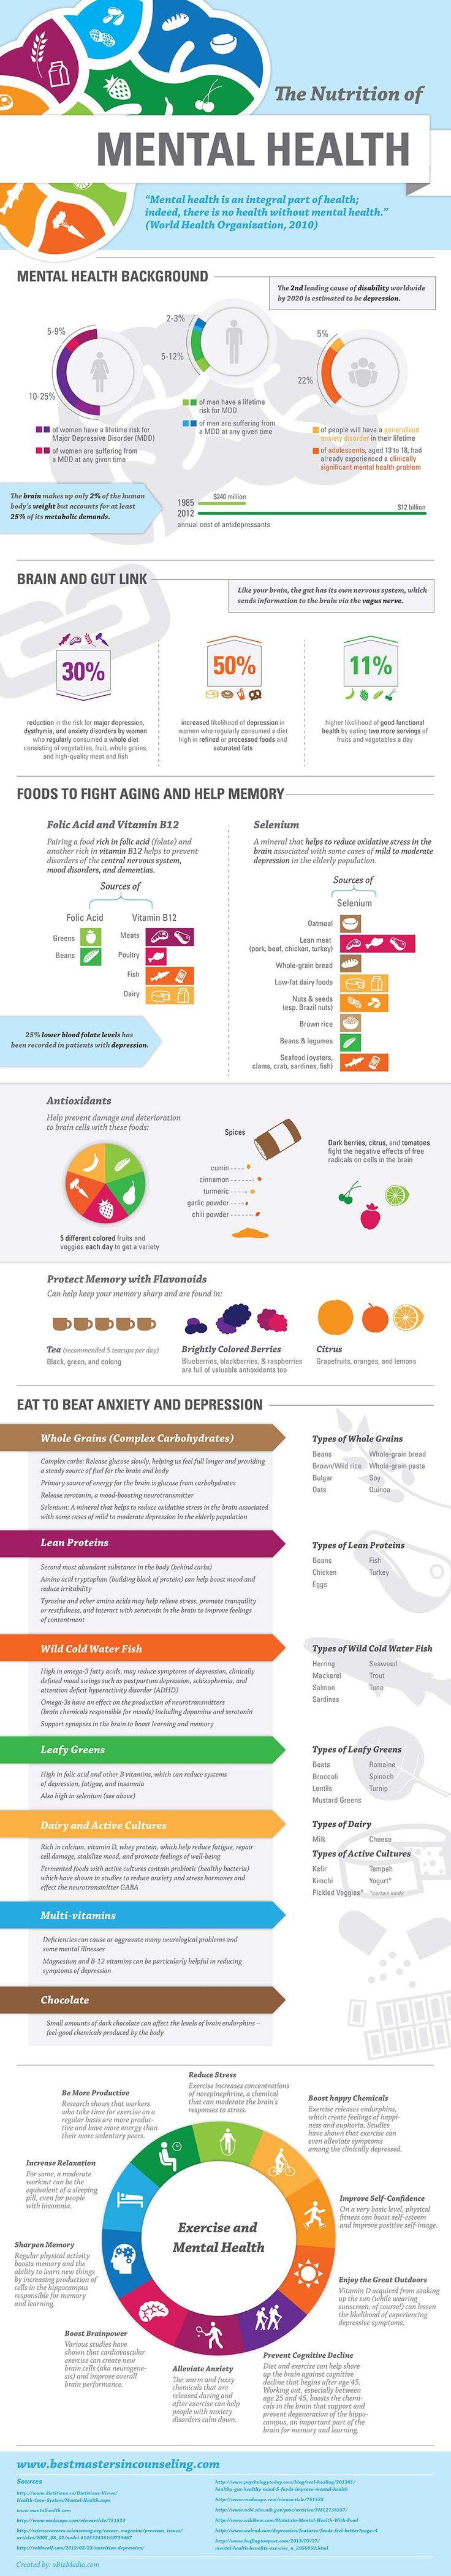 زفاف - Infographic: Nutrition For Mental Health